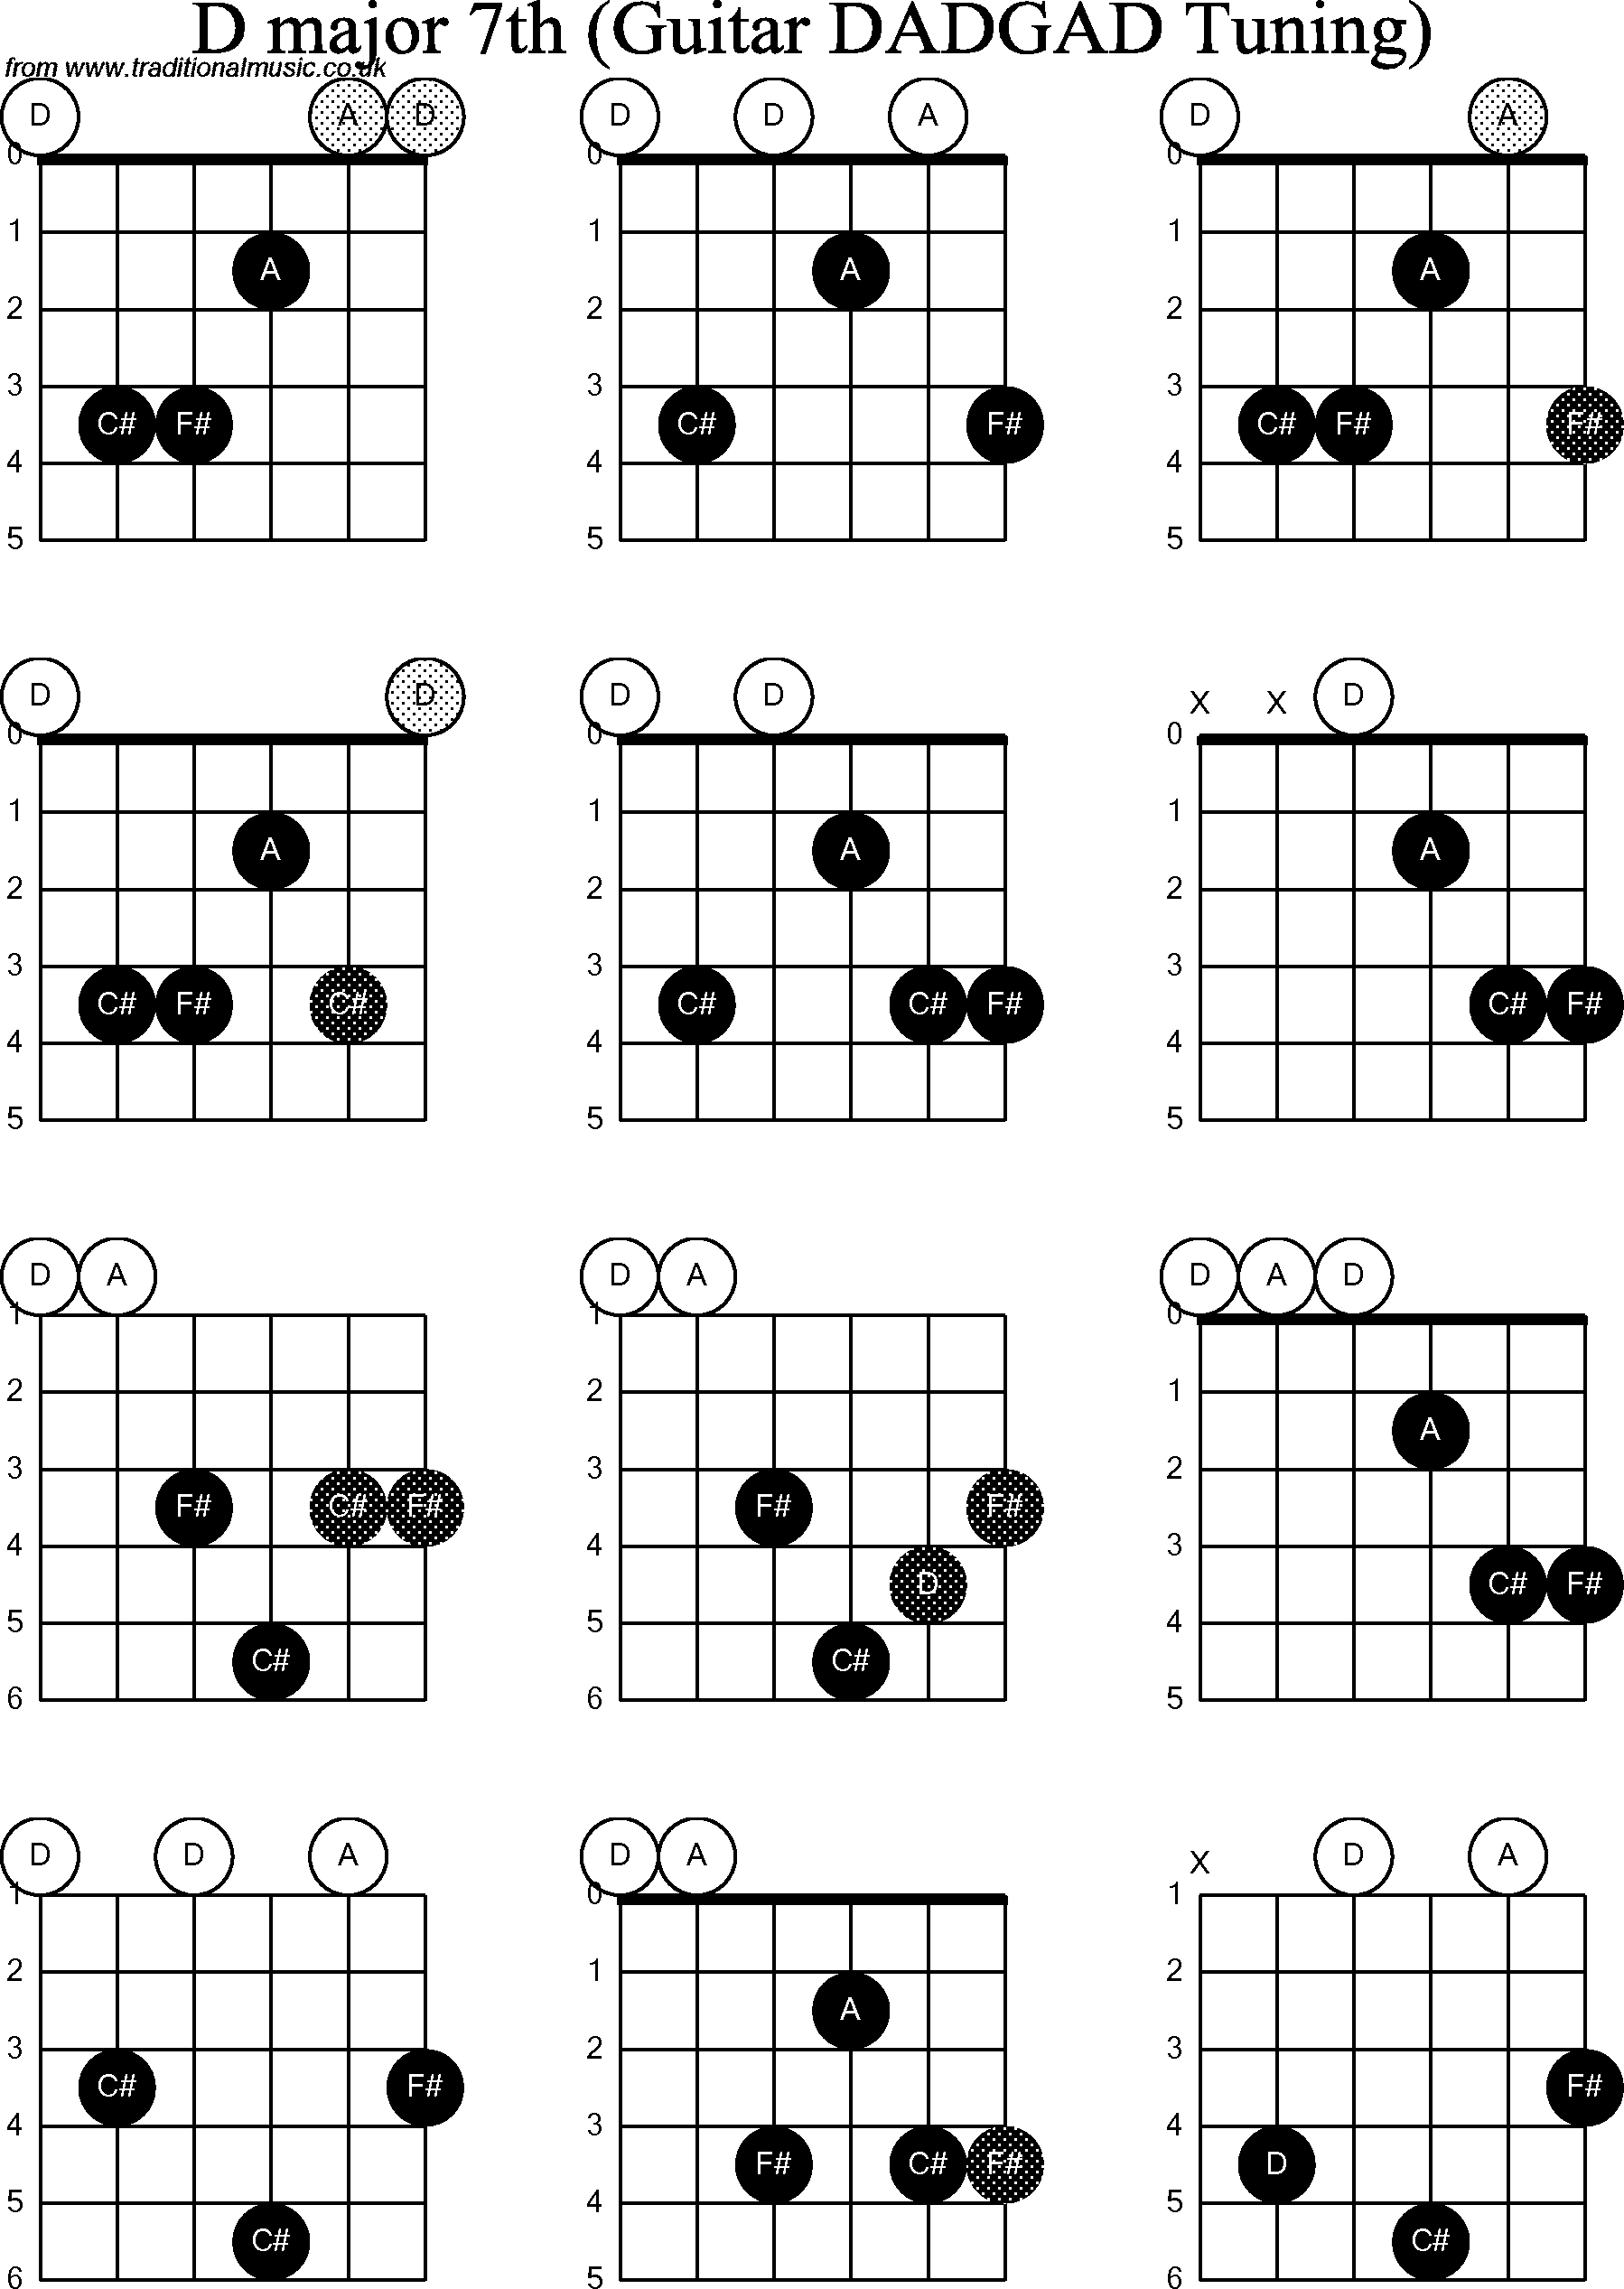 Chord Diagrams for D Modal Guitar(DADGAD), D Major7th